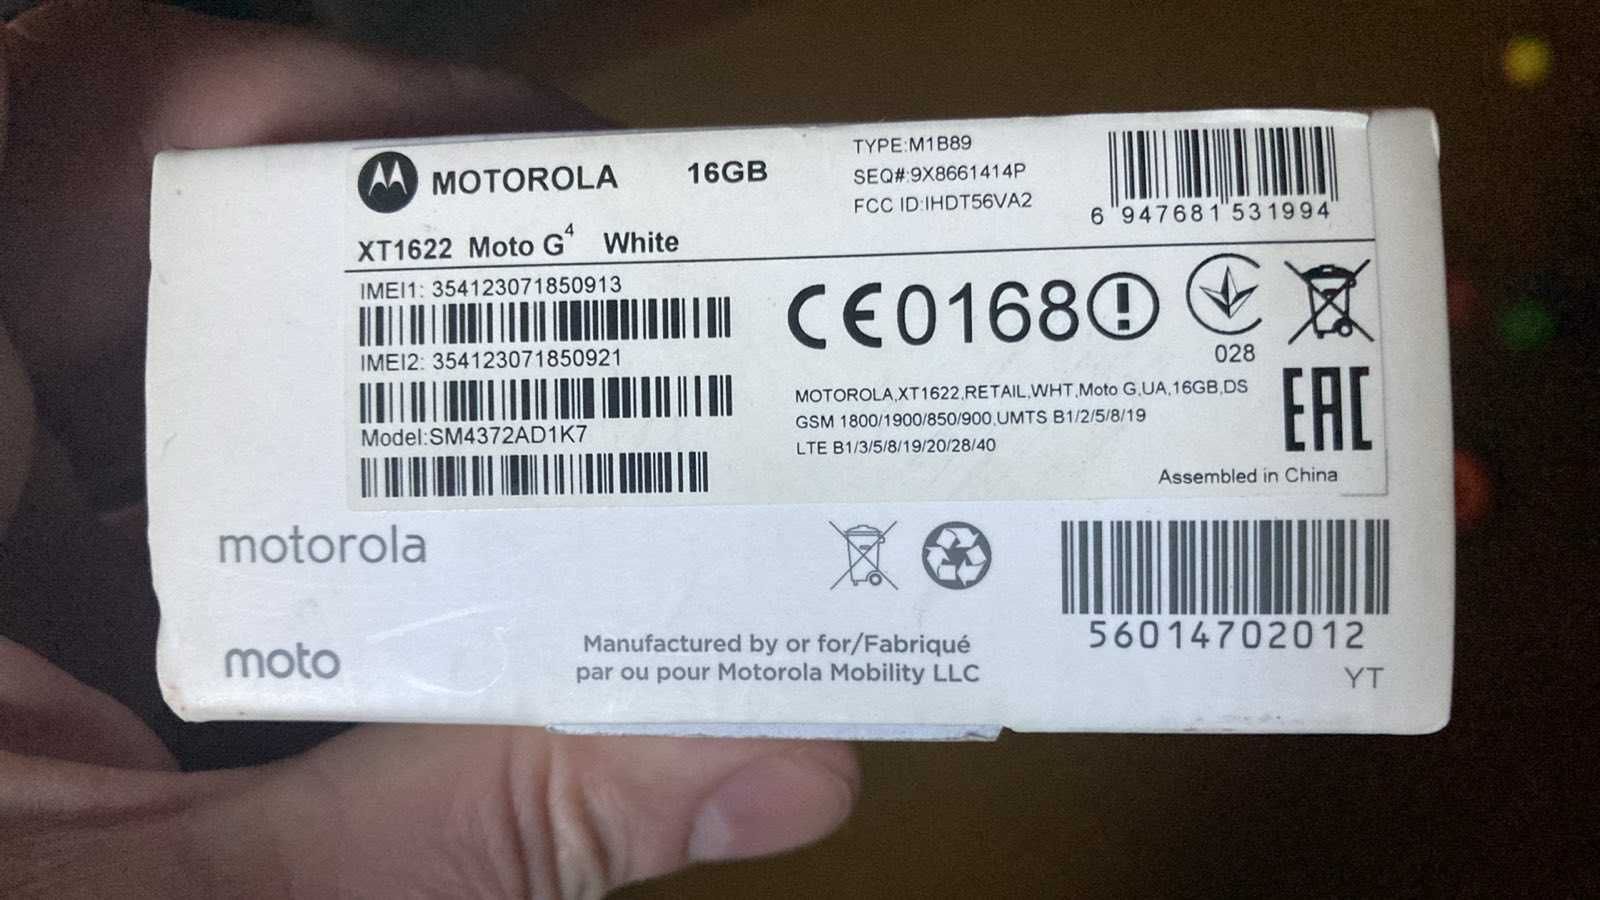 Motorola G4 (XT1622) 2/16 Gb 4G LTE чехол/коробка/шнурок, Android 6.0